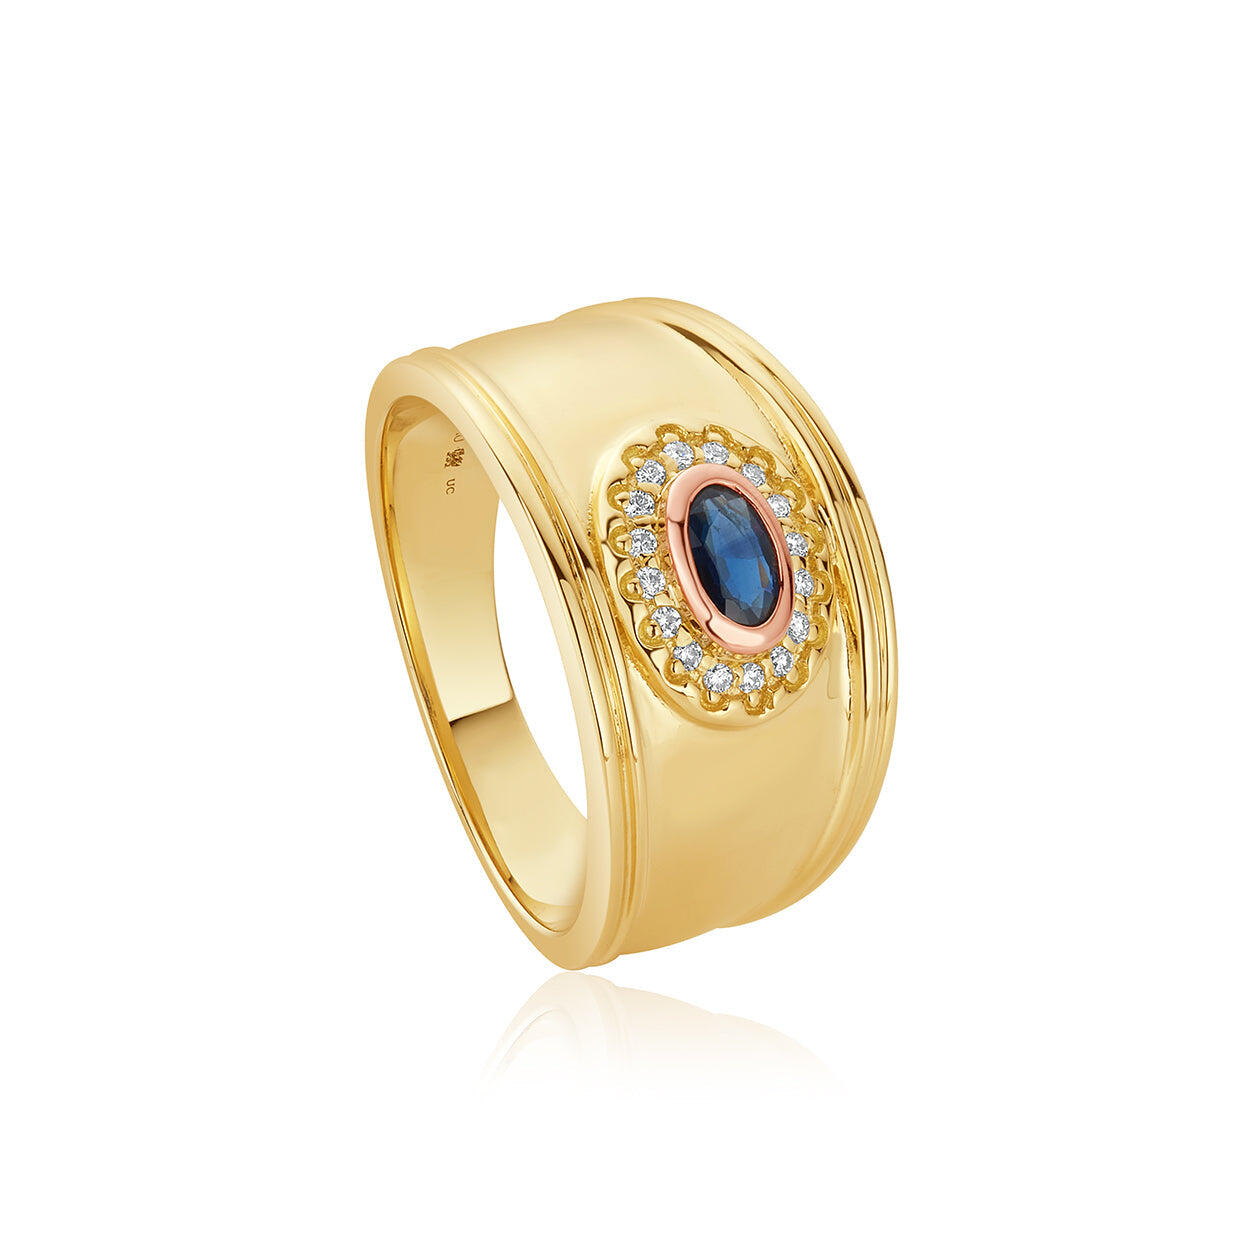 Clogau Princess Diana Sapphire Diamond 9ct Gold Ring - Q